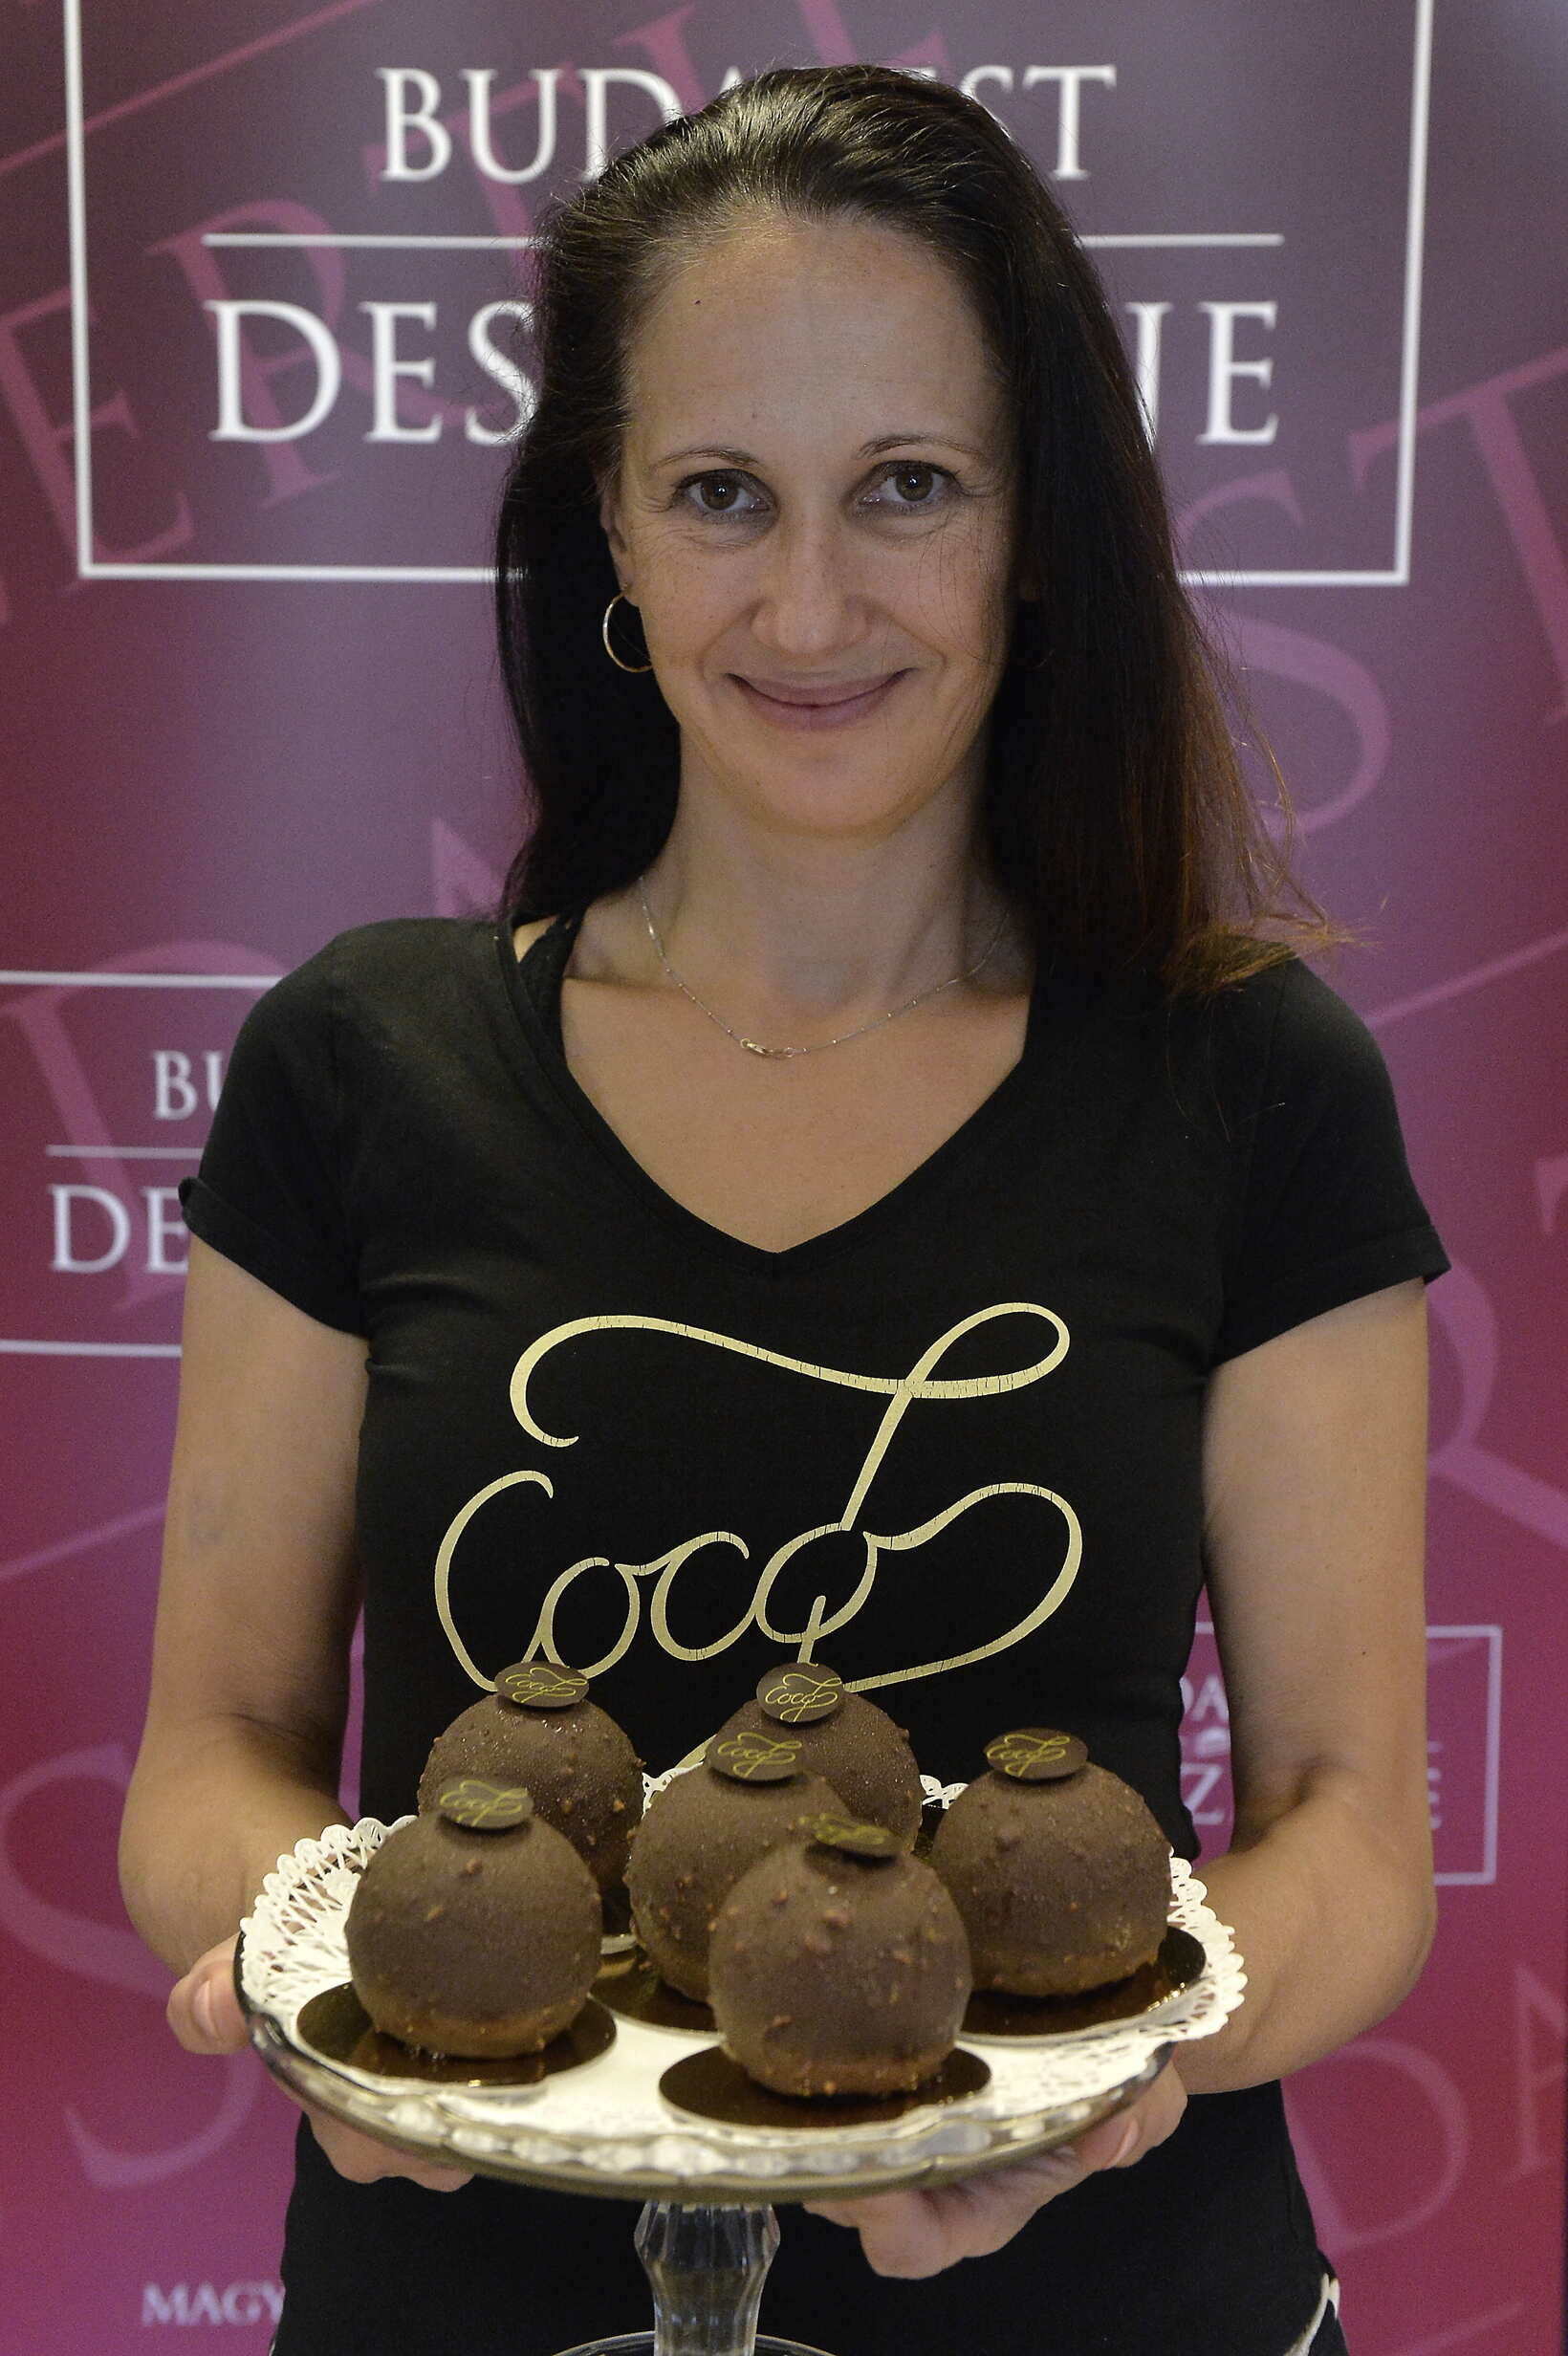 Десерт-Будапешт-Коко7-Шоколад-Магазин-торт-еда